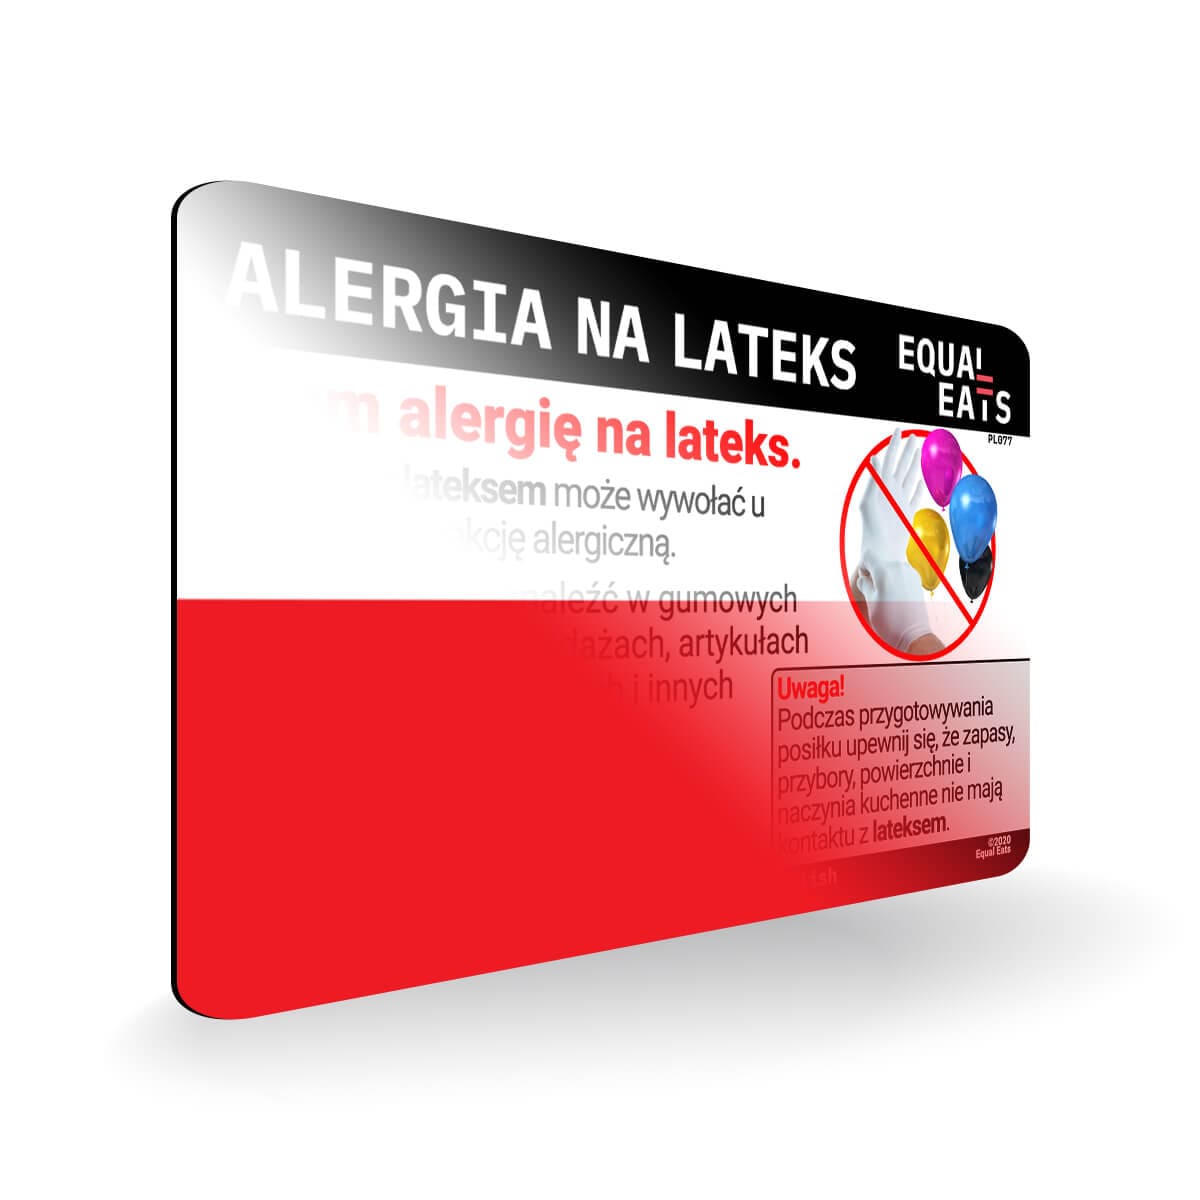 Latex Allergy in Polish. Latex Allergy Travel Card for Poland